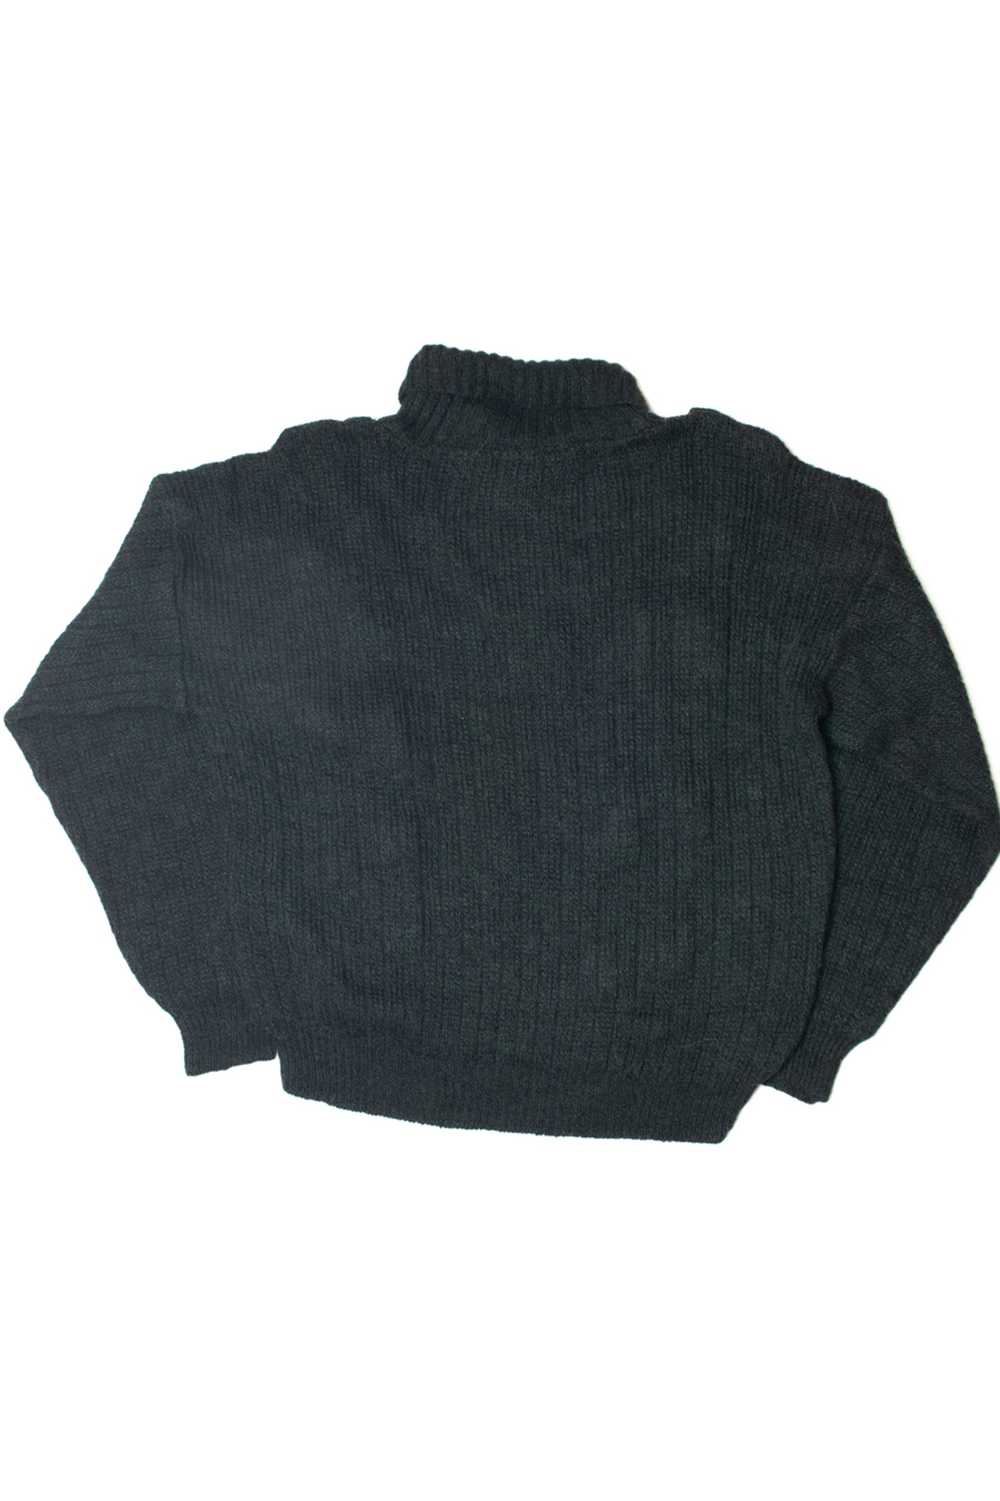 Vintage Dark Green 80s Sweater With Pleather Trim - image 3